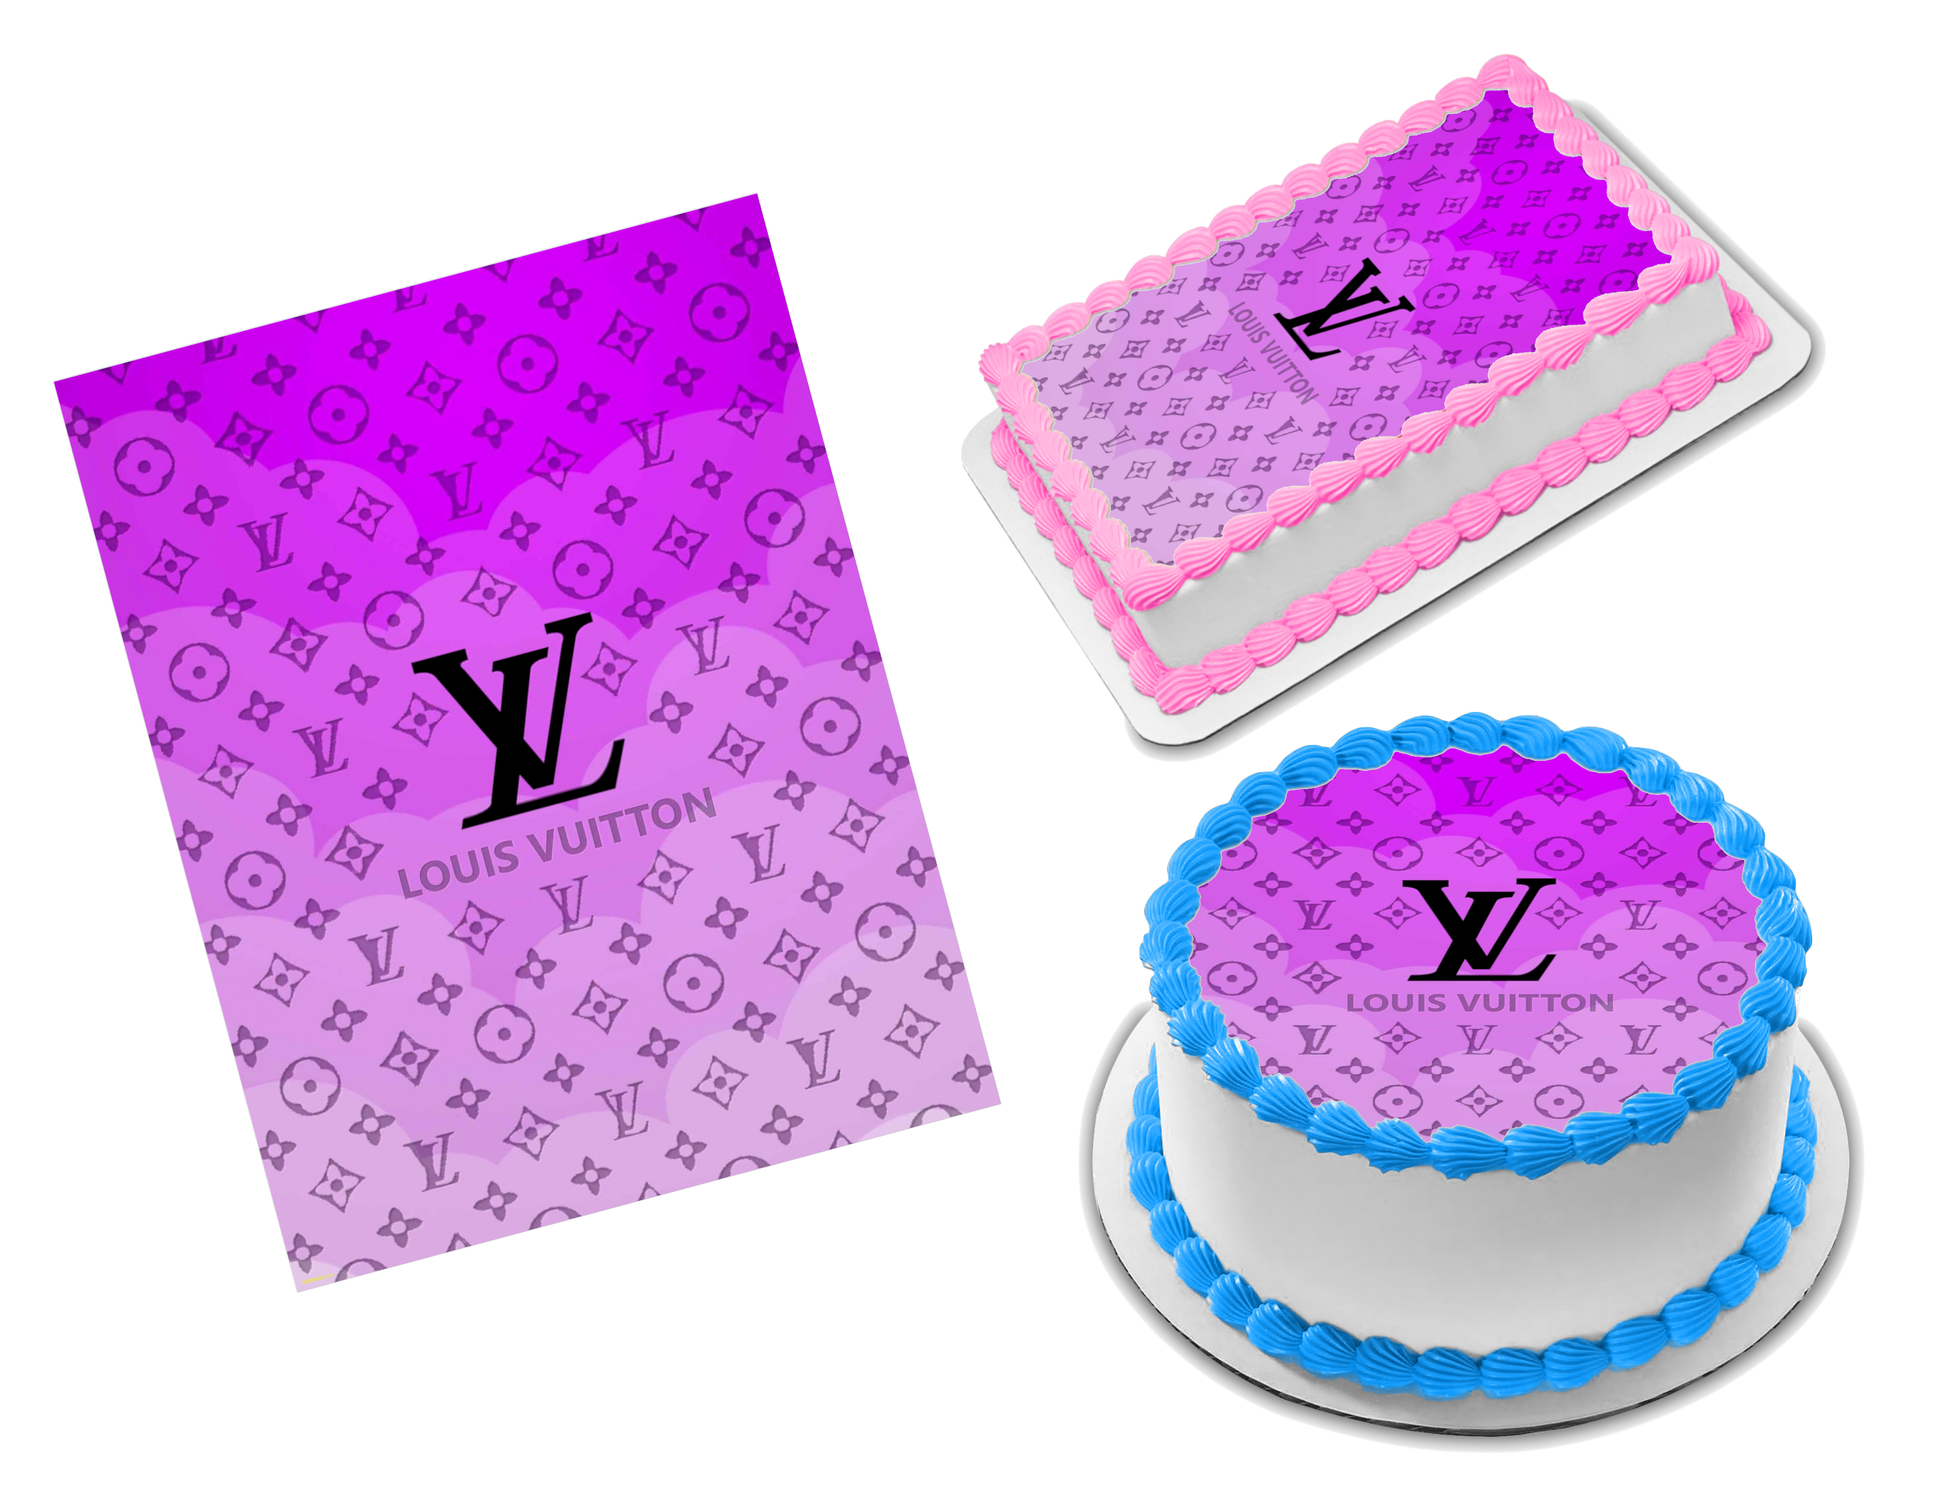 Louis Vuitton Pattern Edible Cake Toppers